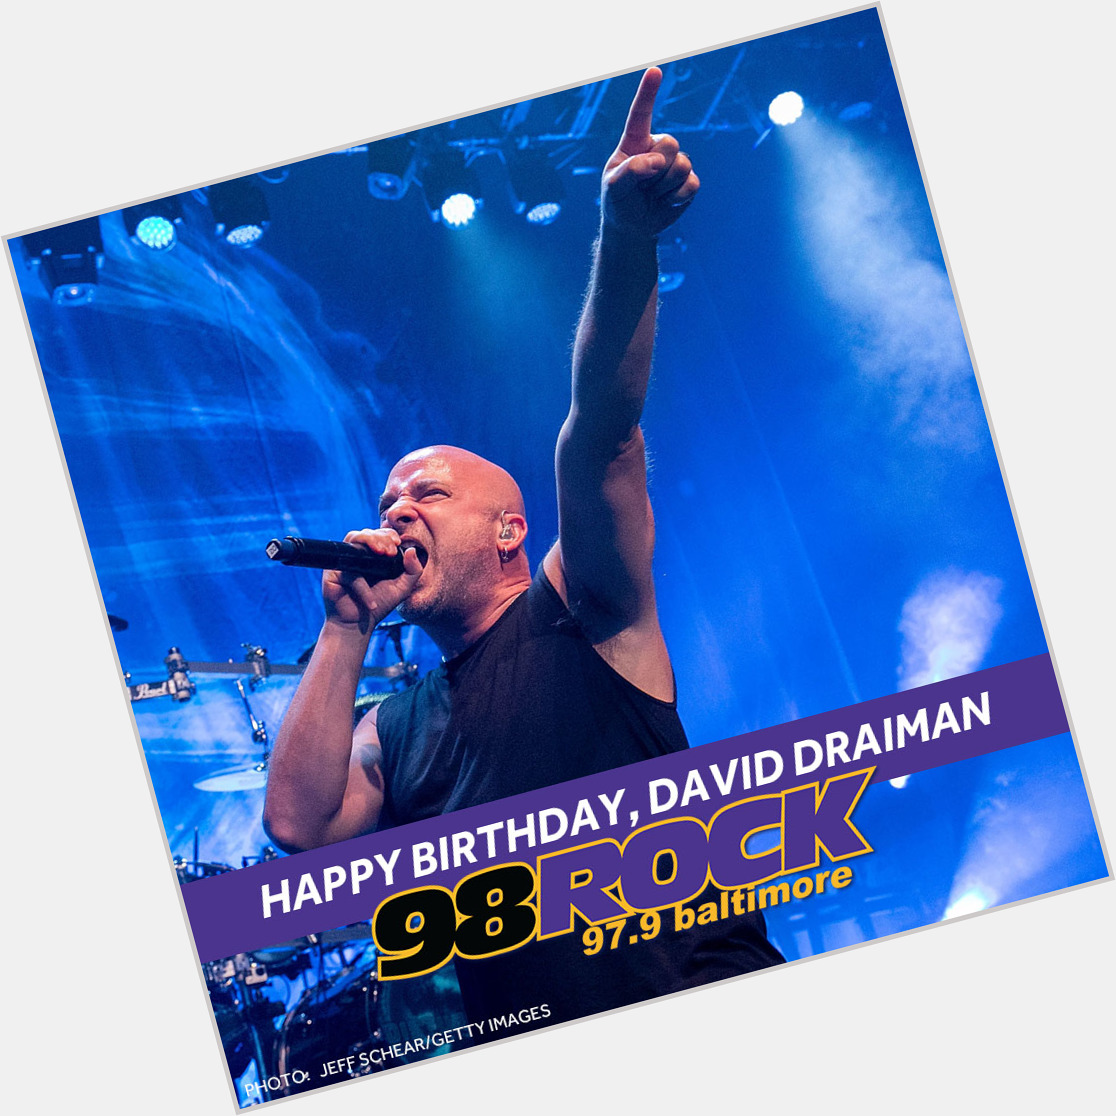 Happy 48th Birthday today to David Draiman of   